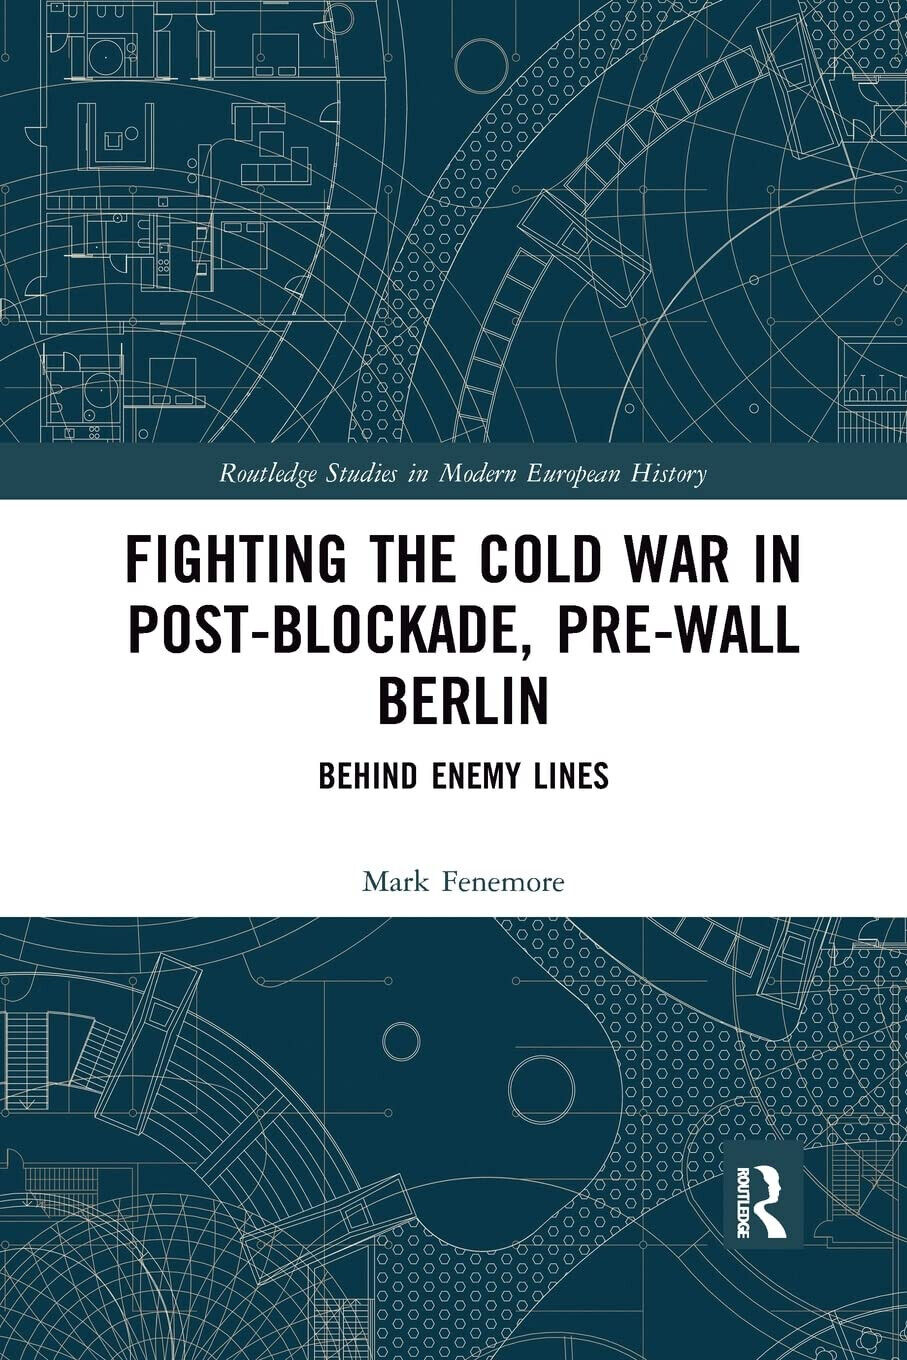 Fighting The Cold War In Post-Blockade, Pre-Wall Berlin - Mark Fenemore - 2021